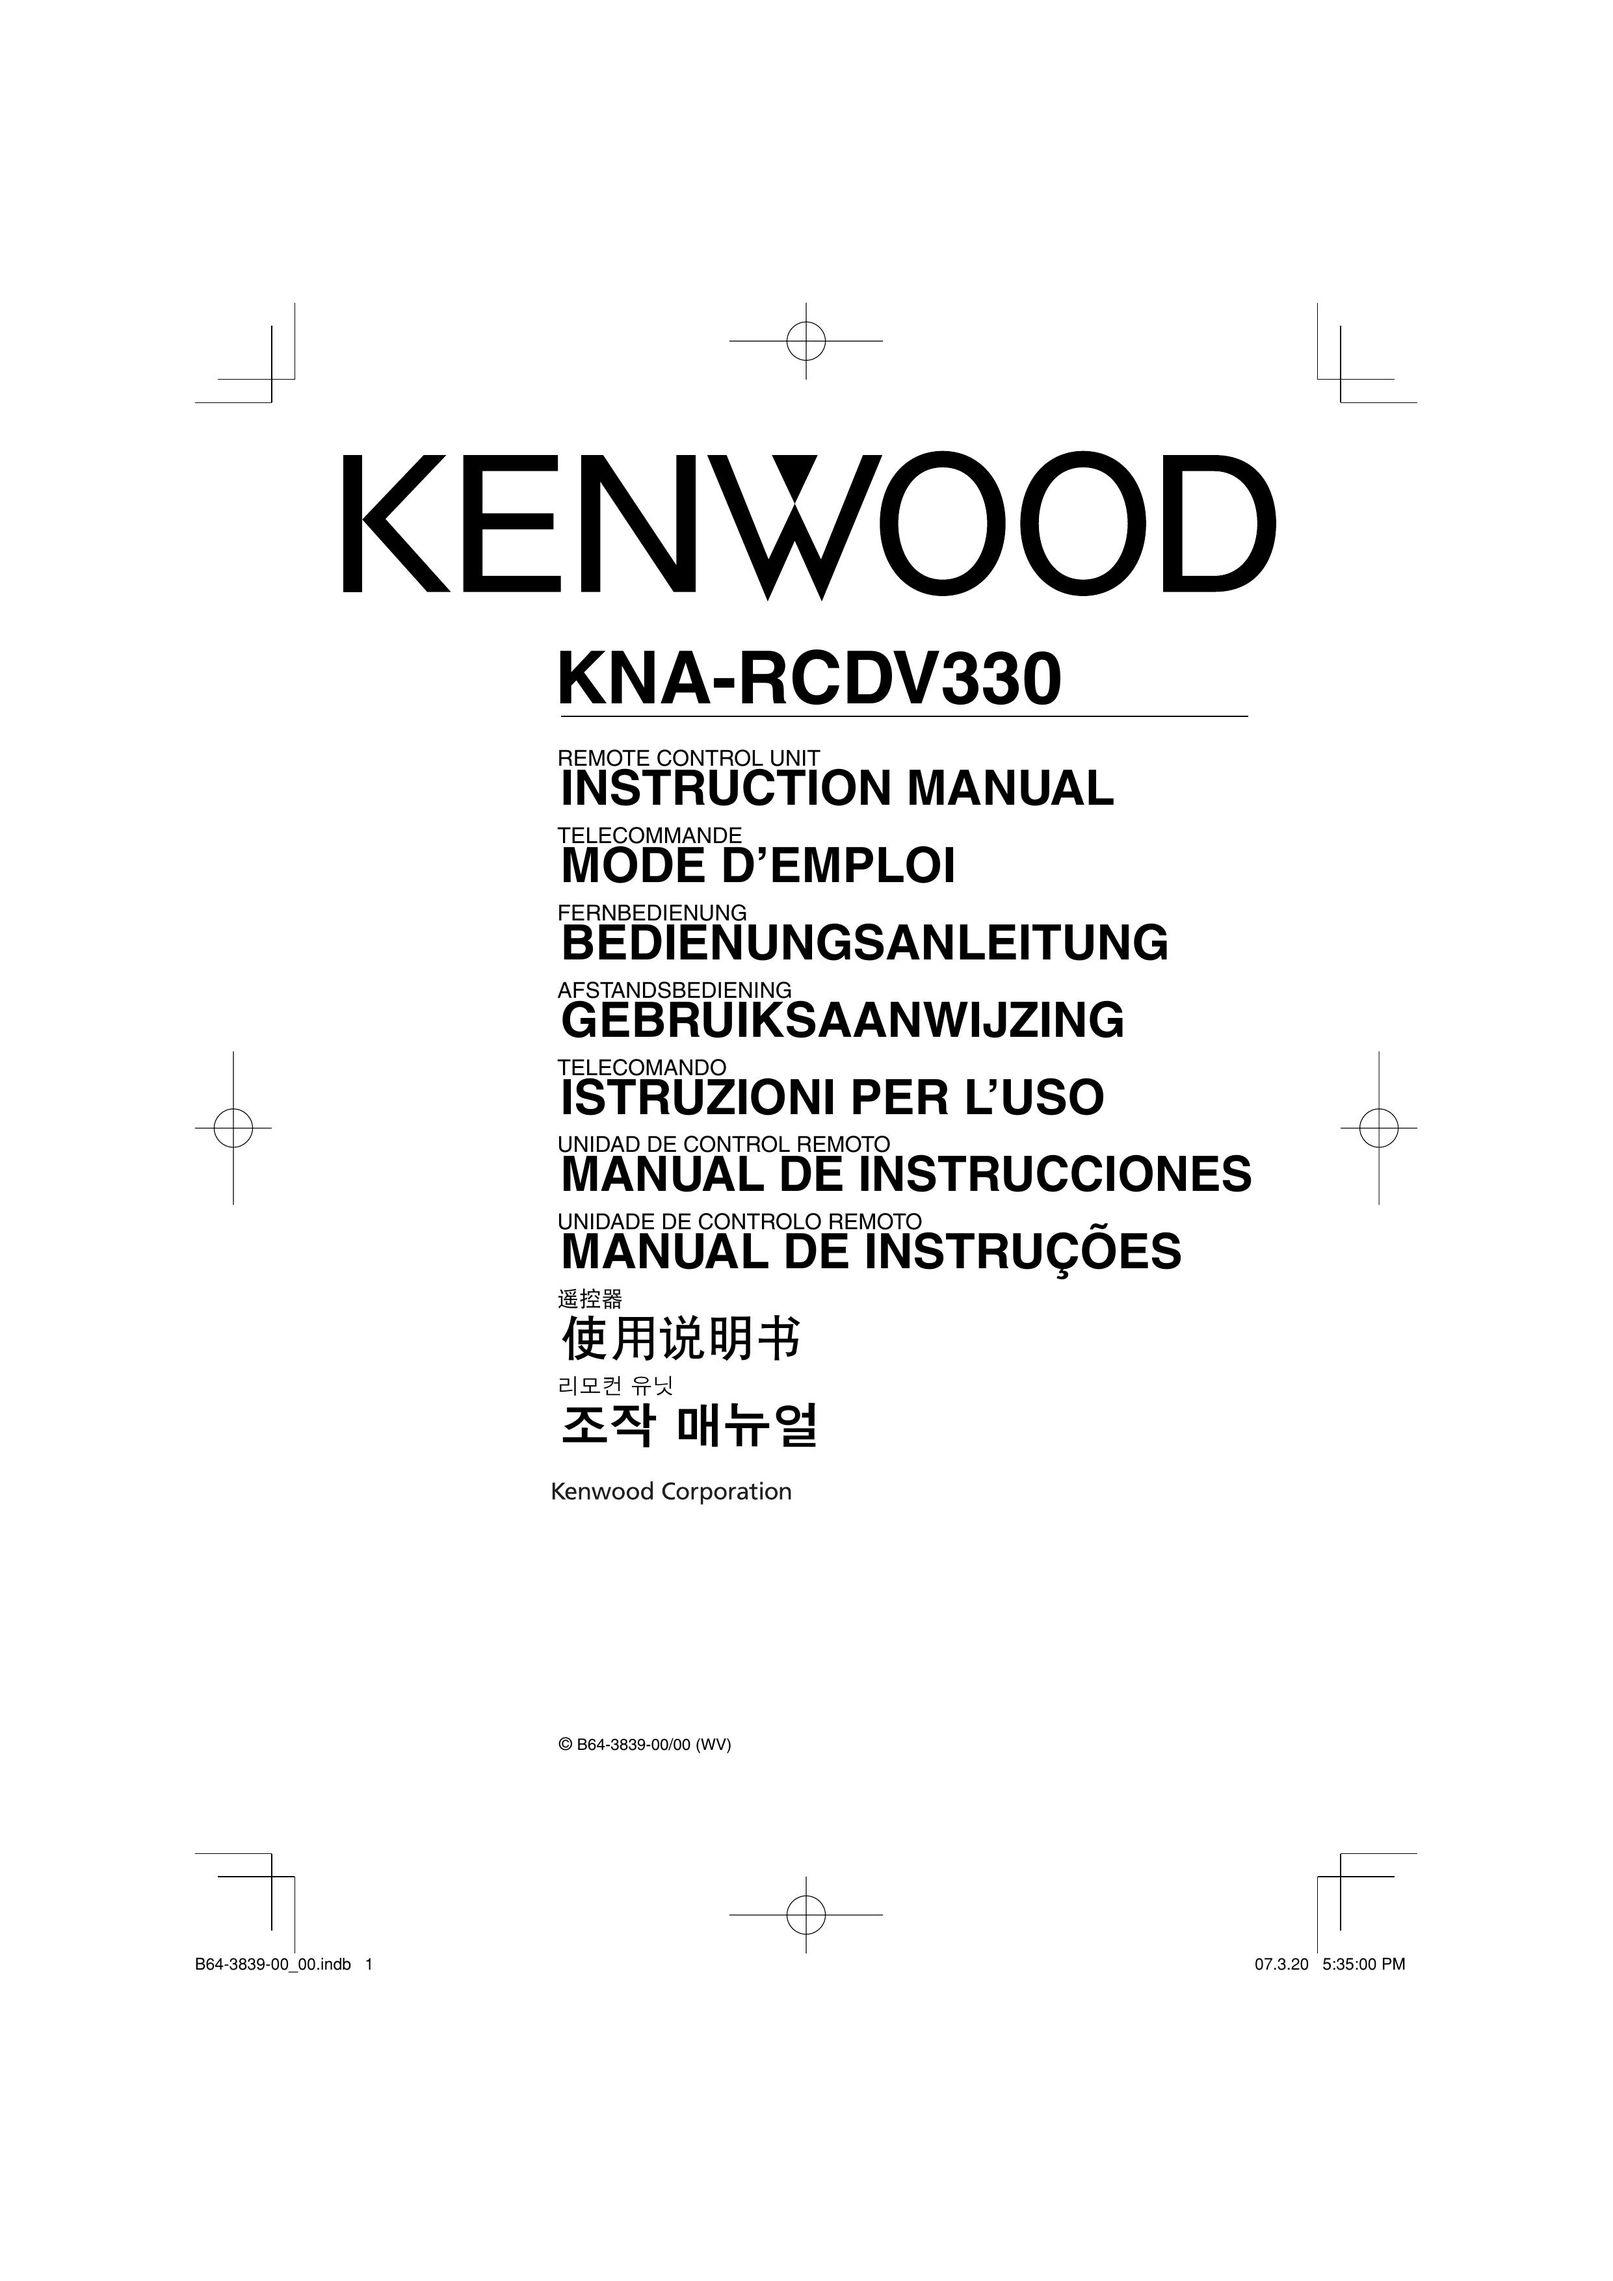 Kenwood KNA-RCDV330 Universal Remote User Manual